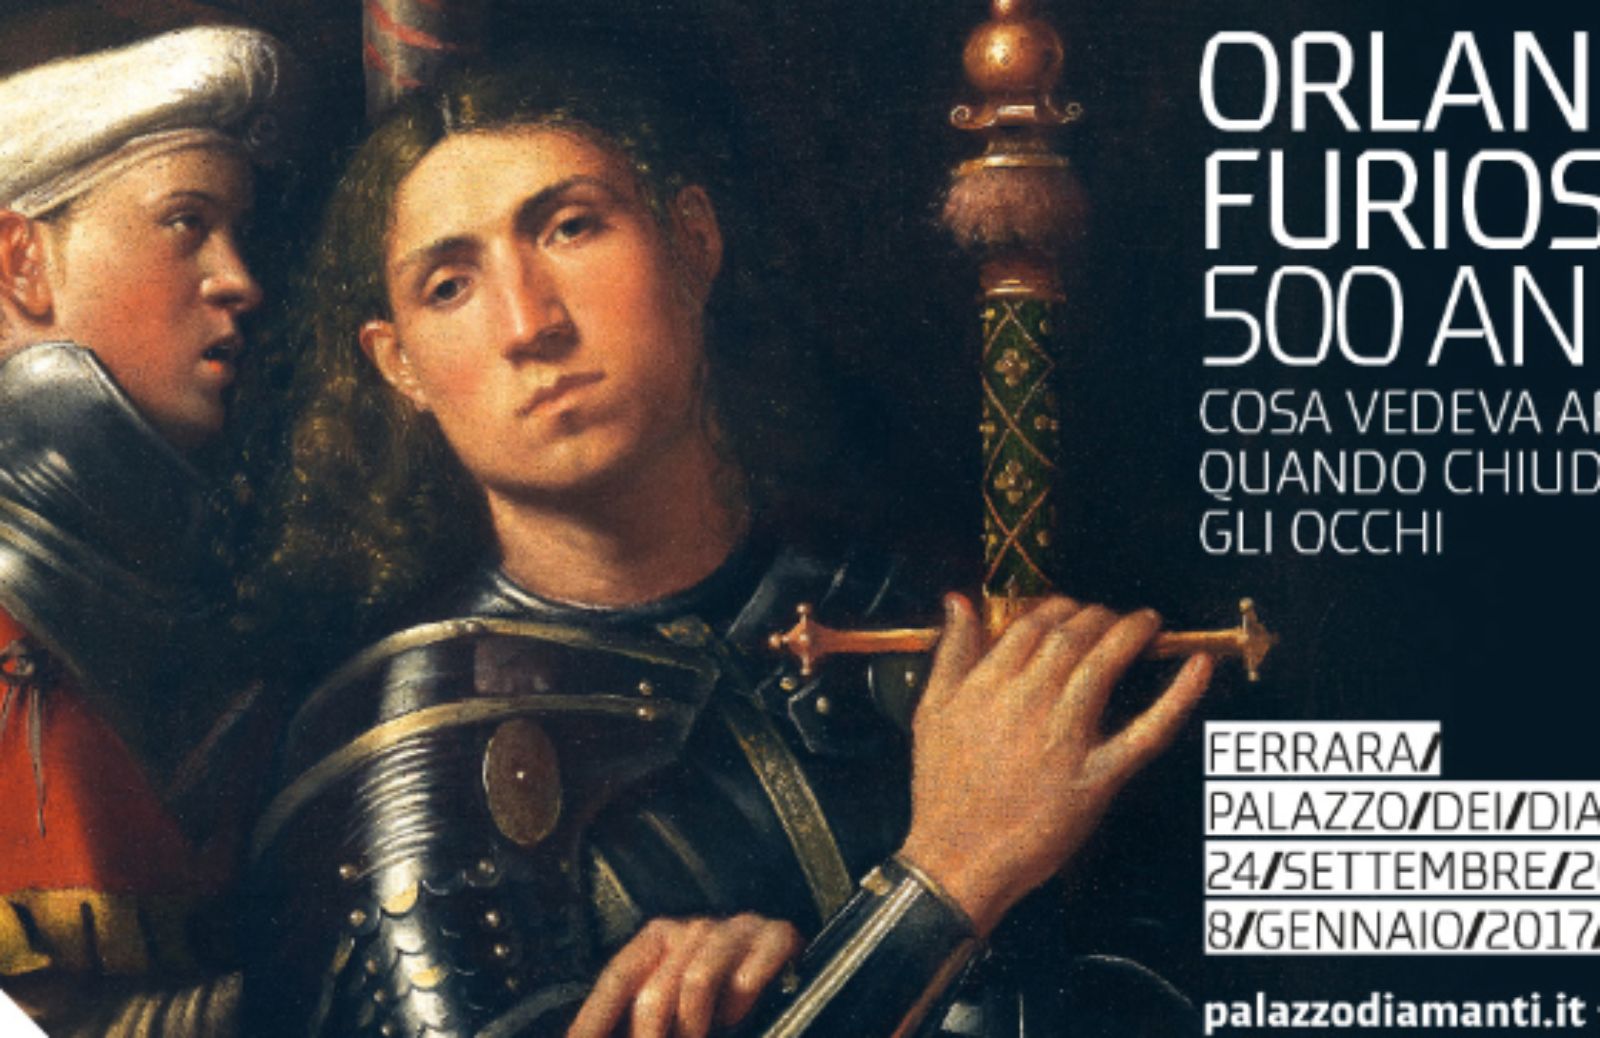 Orlando Furioso 500 anni: Ferrara celebra l’Ariosto 